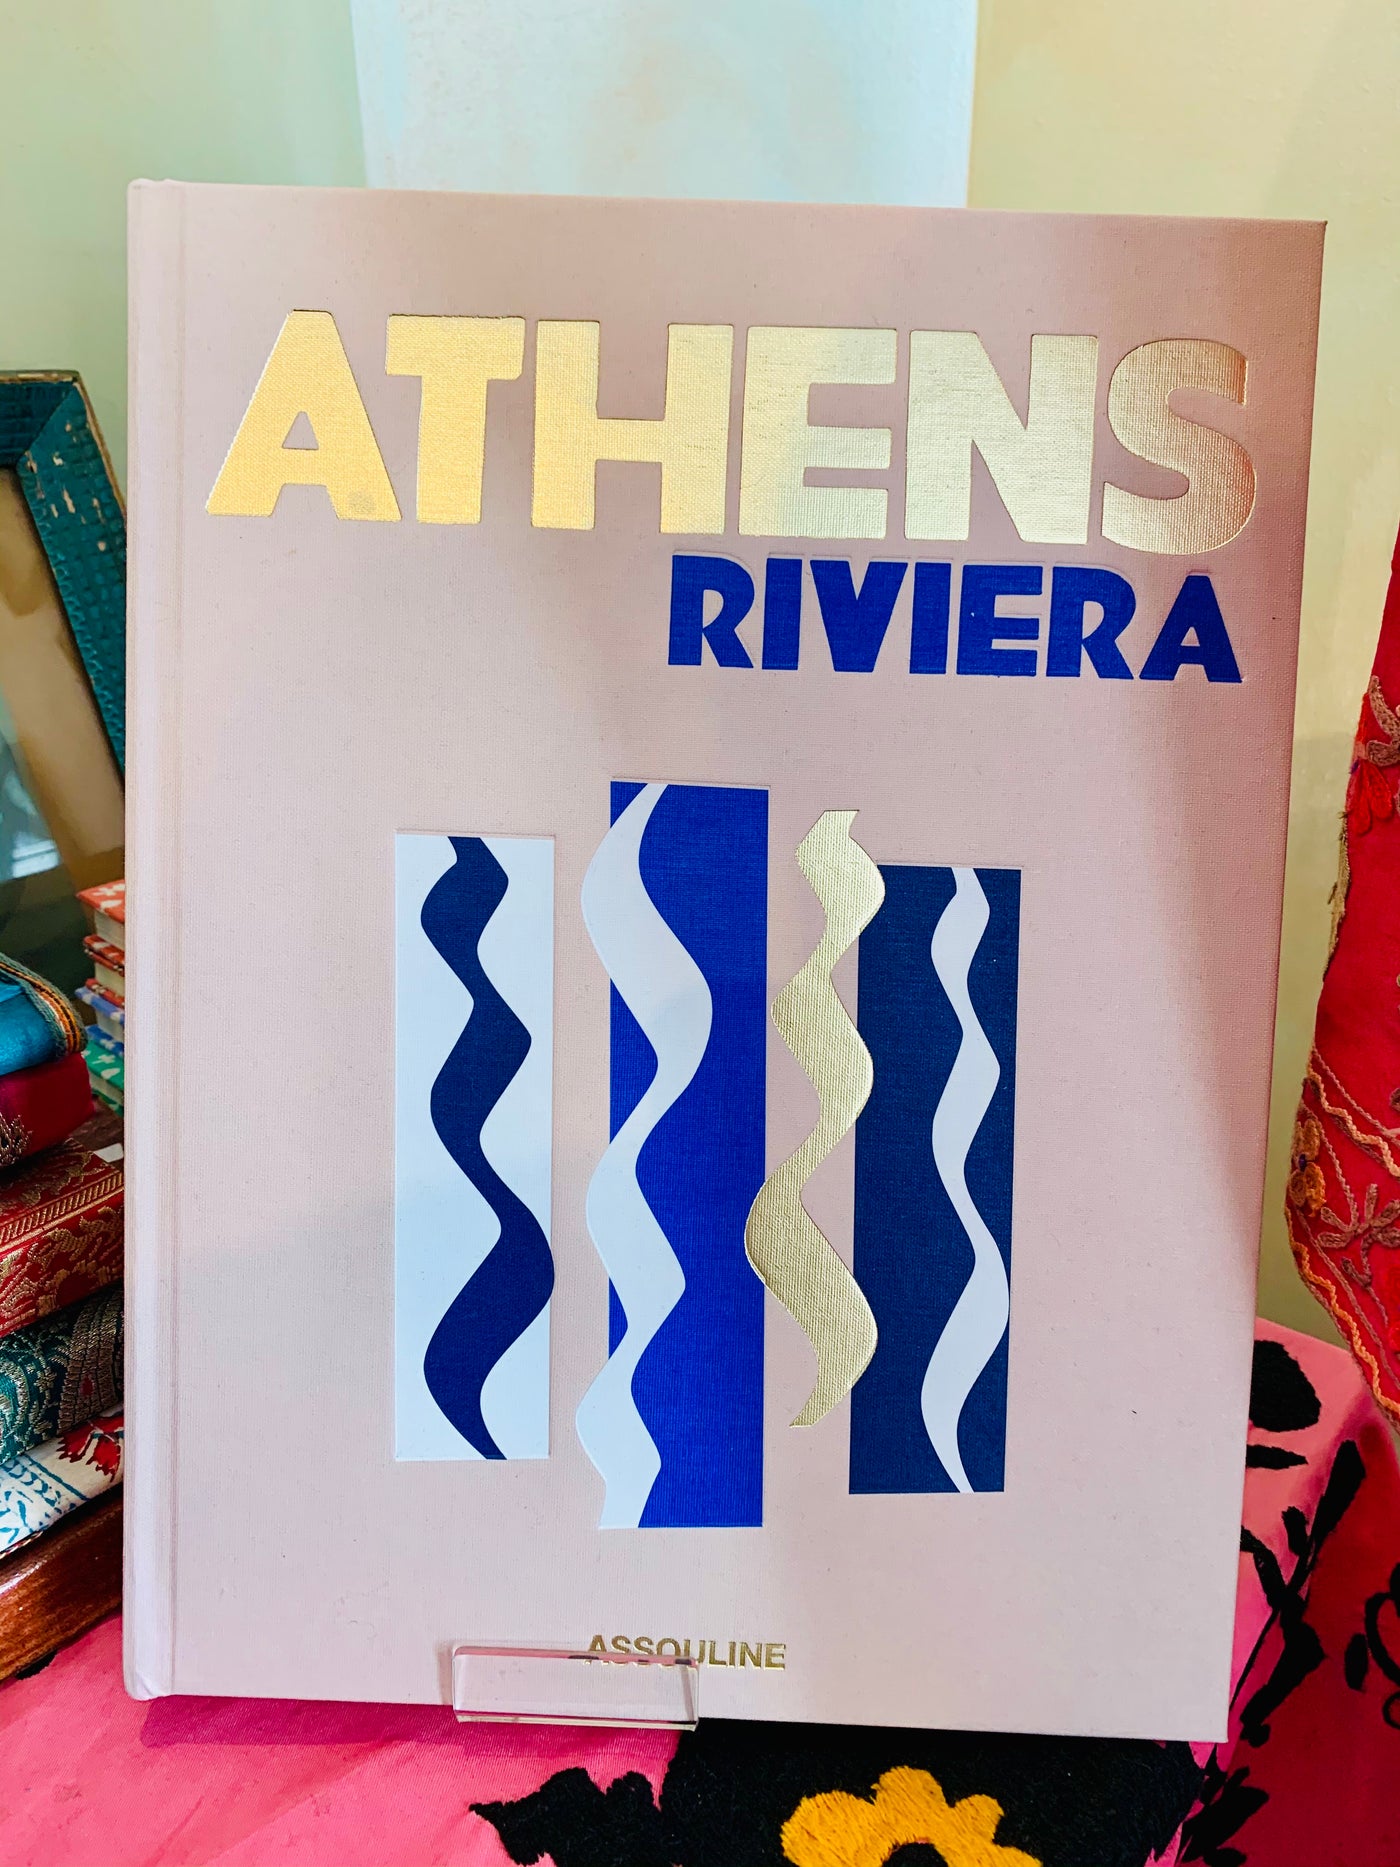 Athens Riviera book